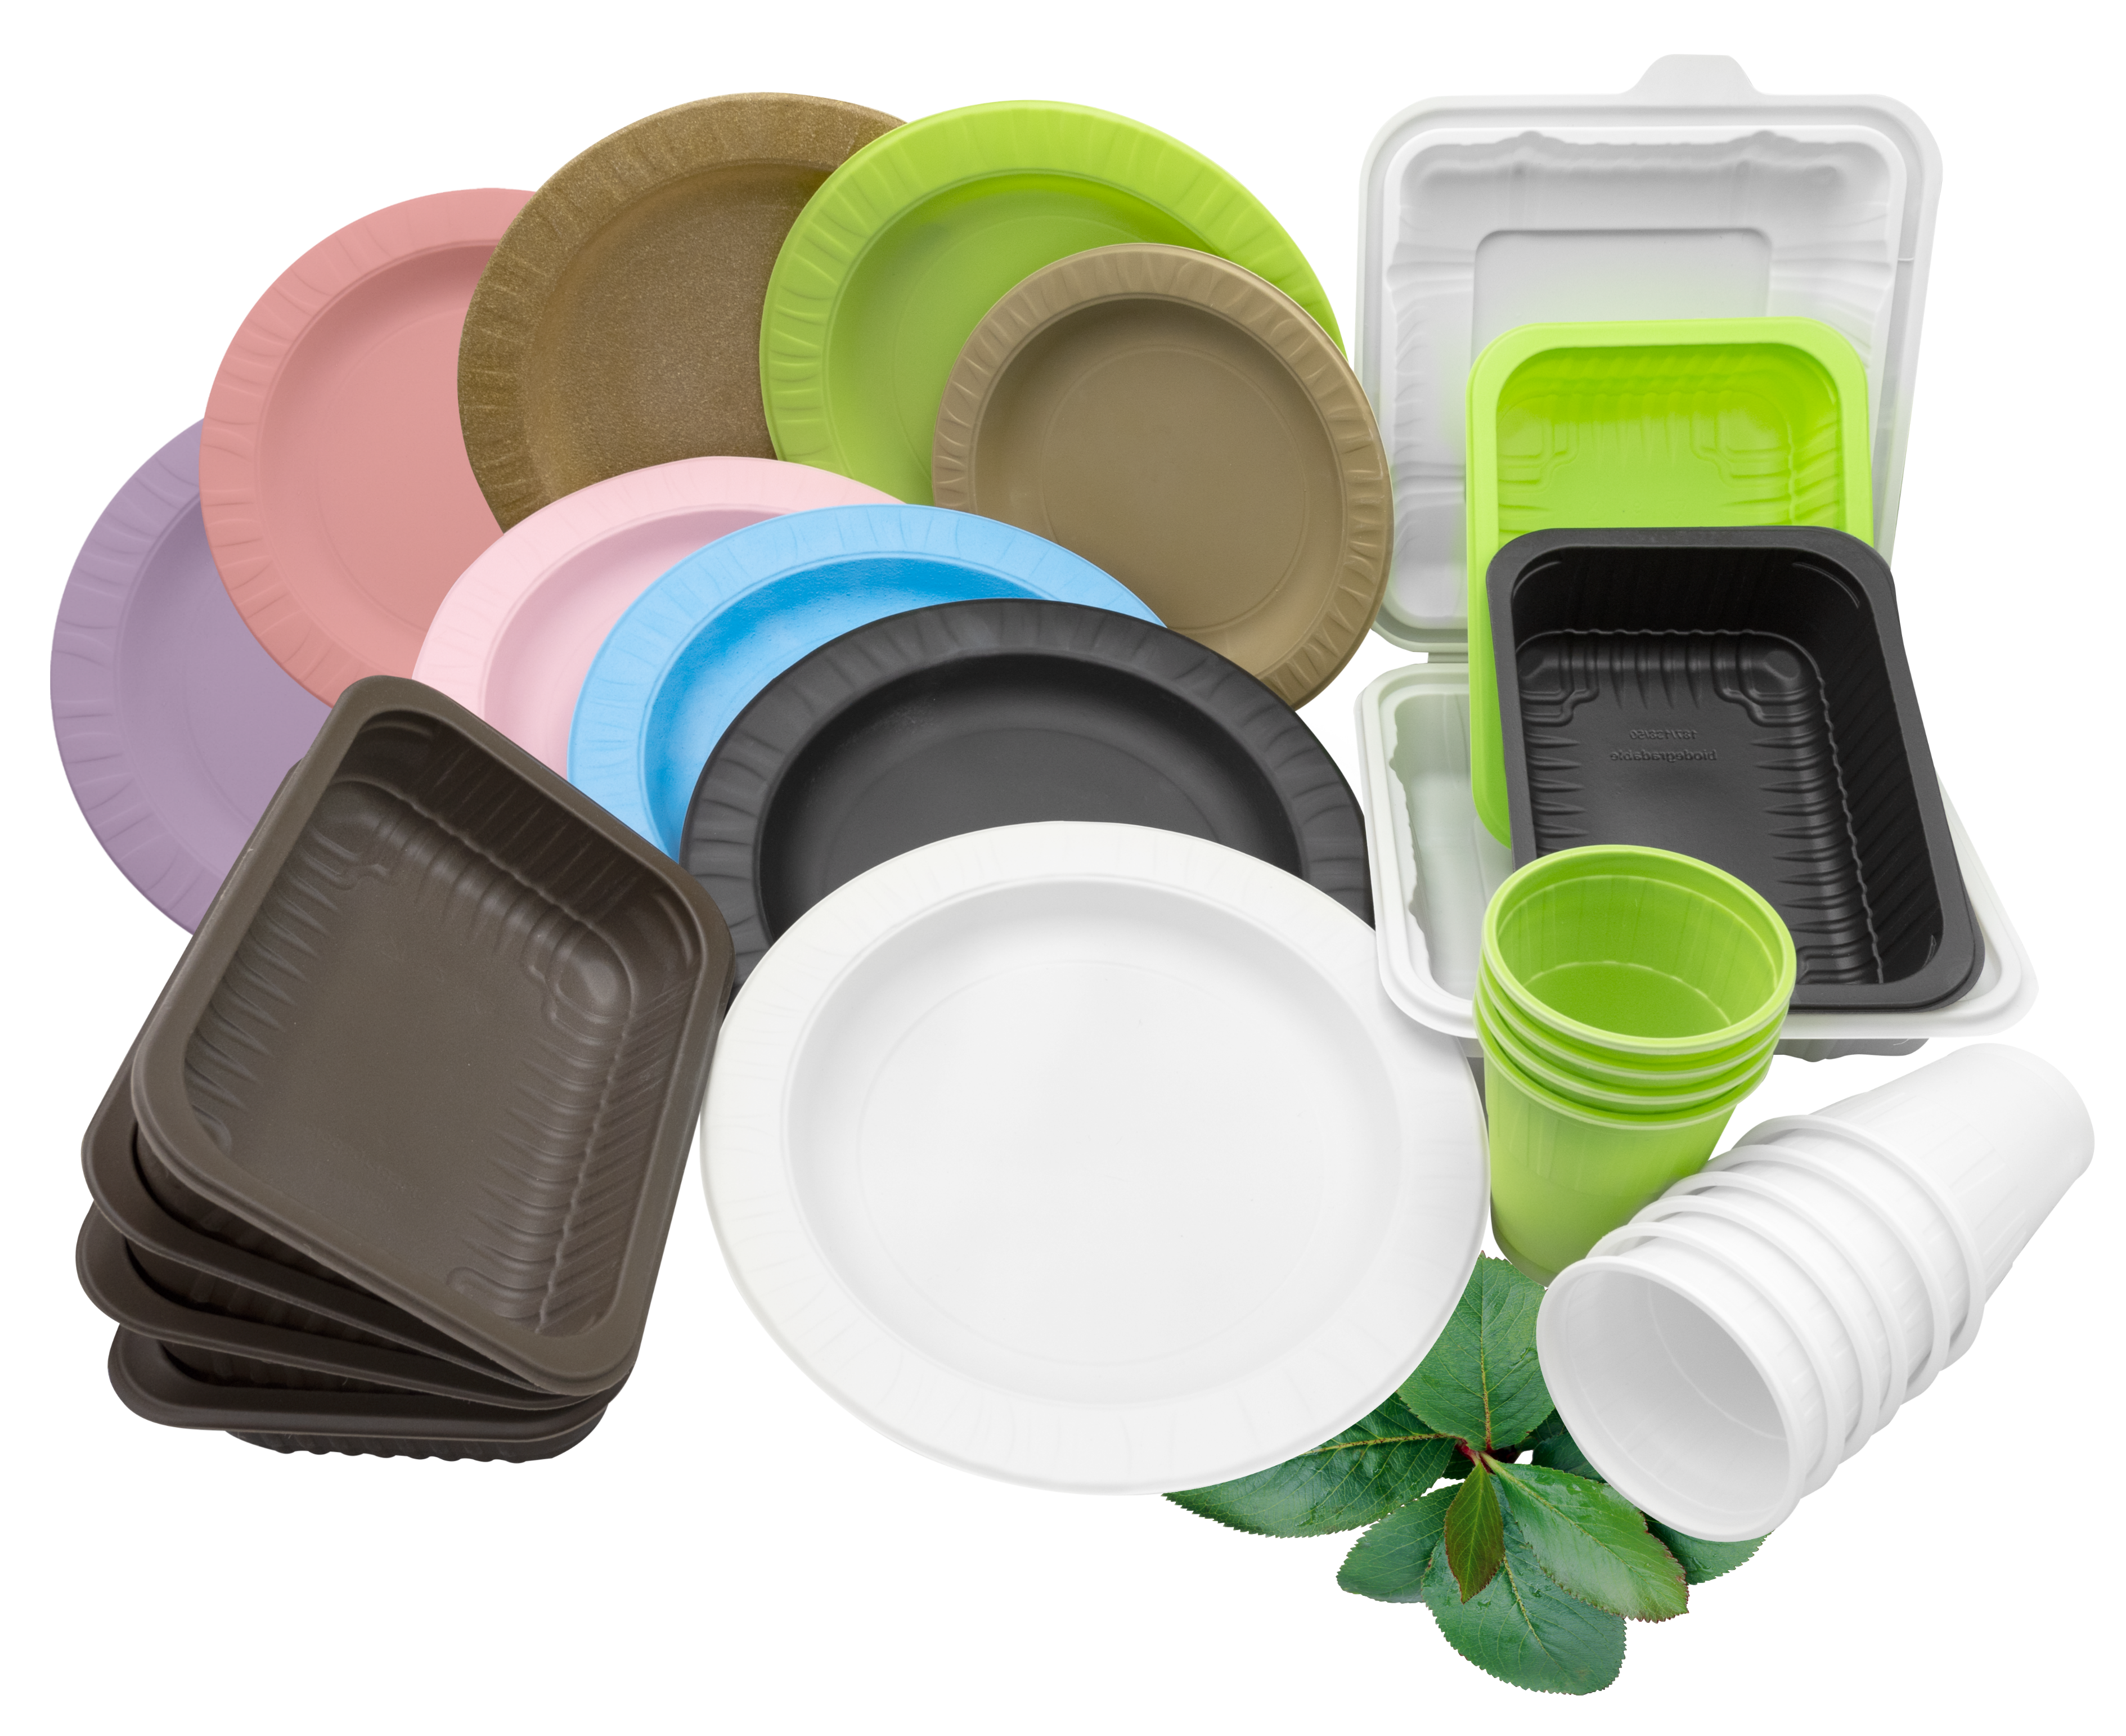 Items clear. Пластиковая посуда. Пластмассовая одноразовая посуда. Одноразовая посуда из пластика. Биоразлагаемая одноразовая посуда.